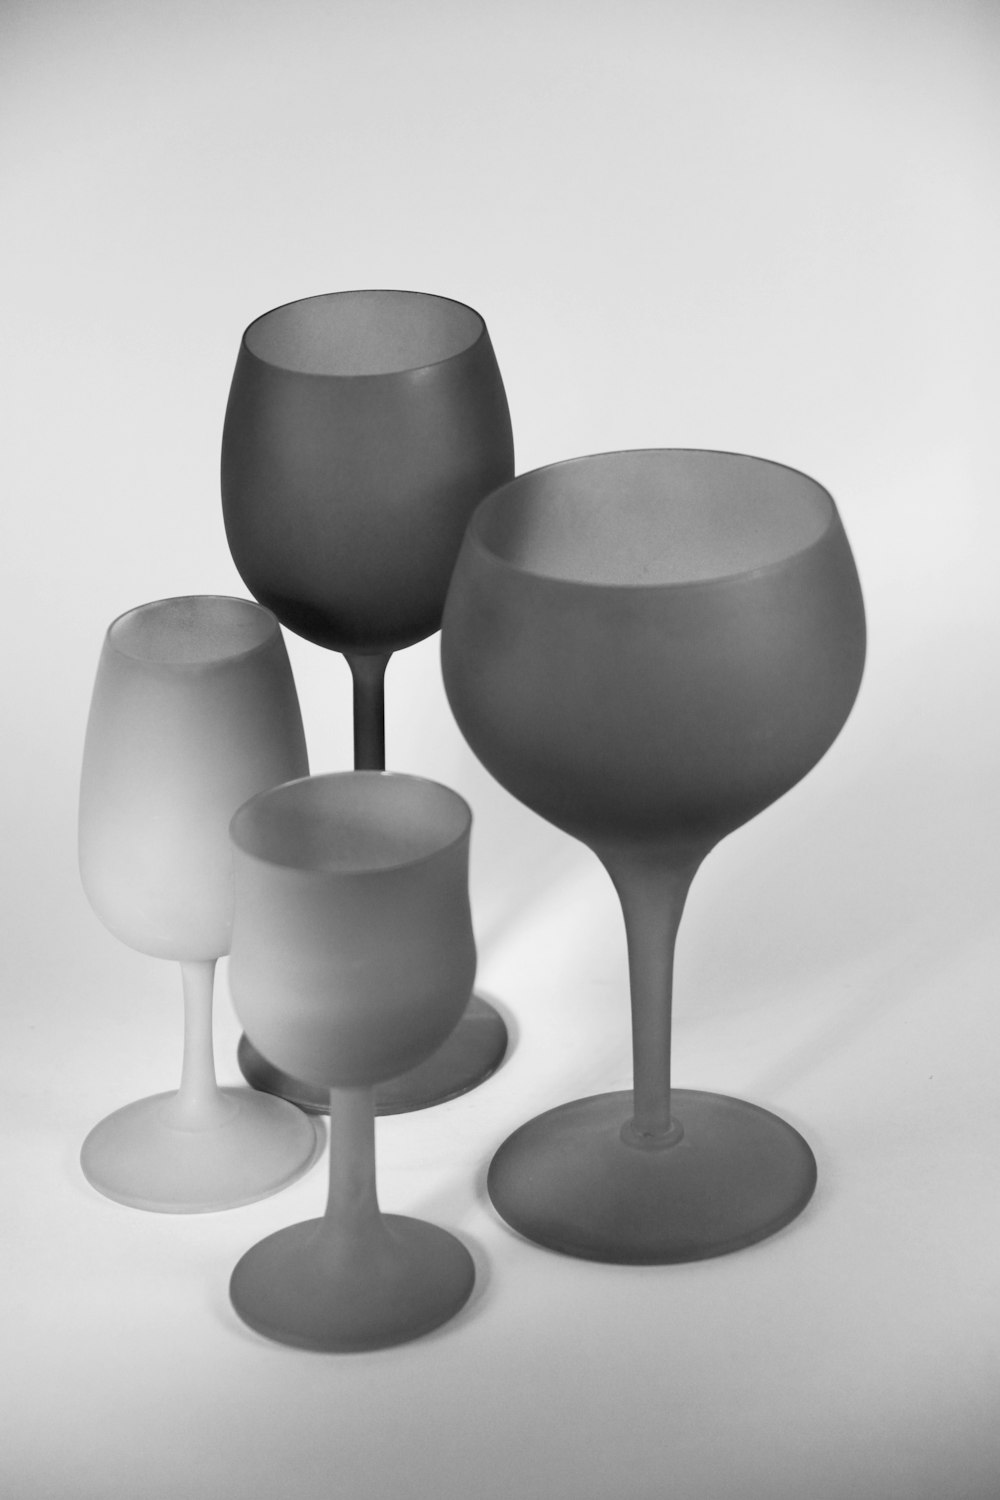 four gray wine glasses illustration